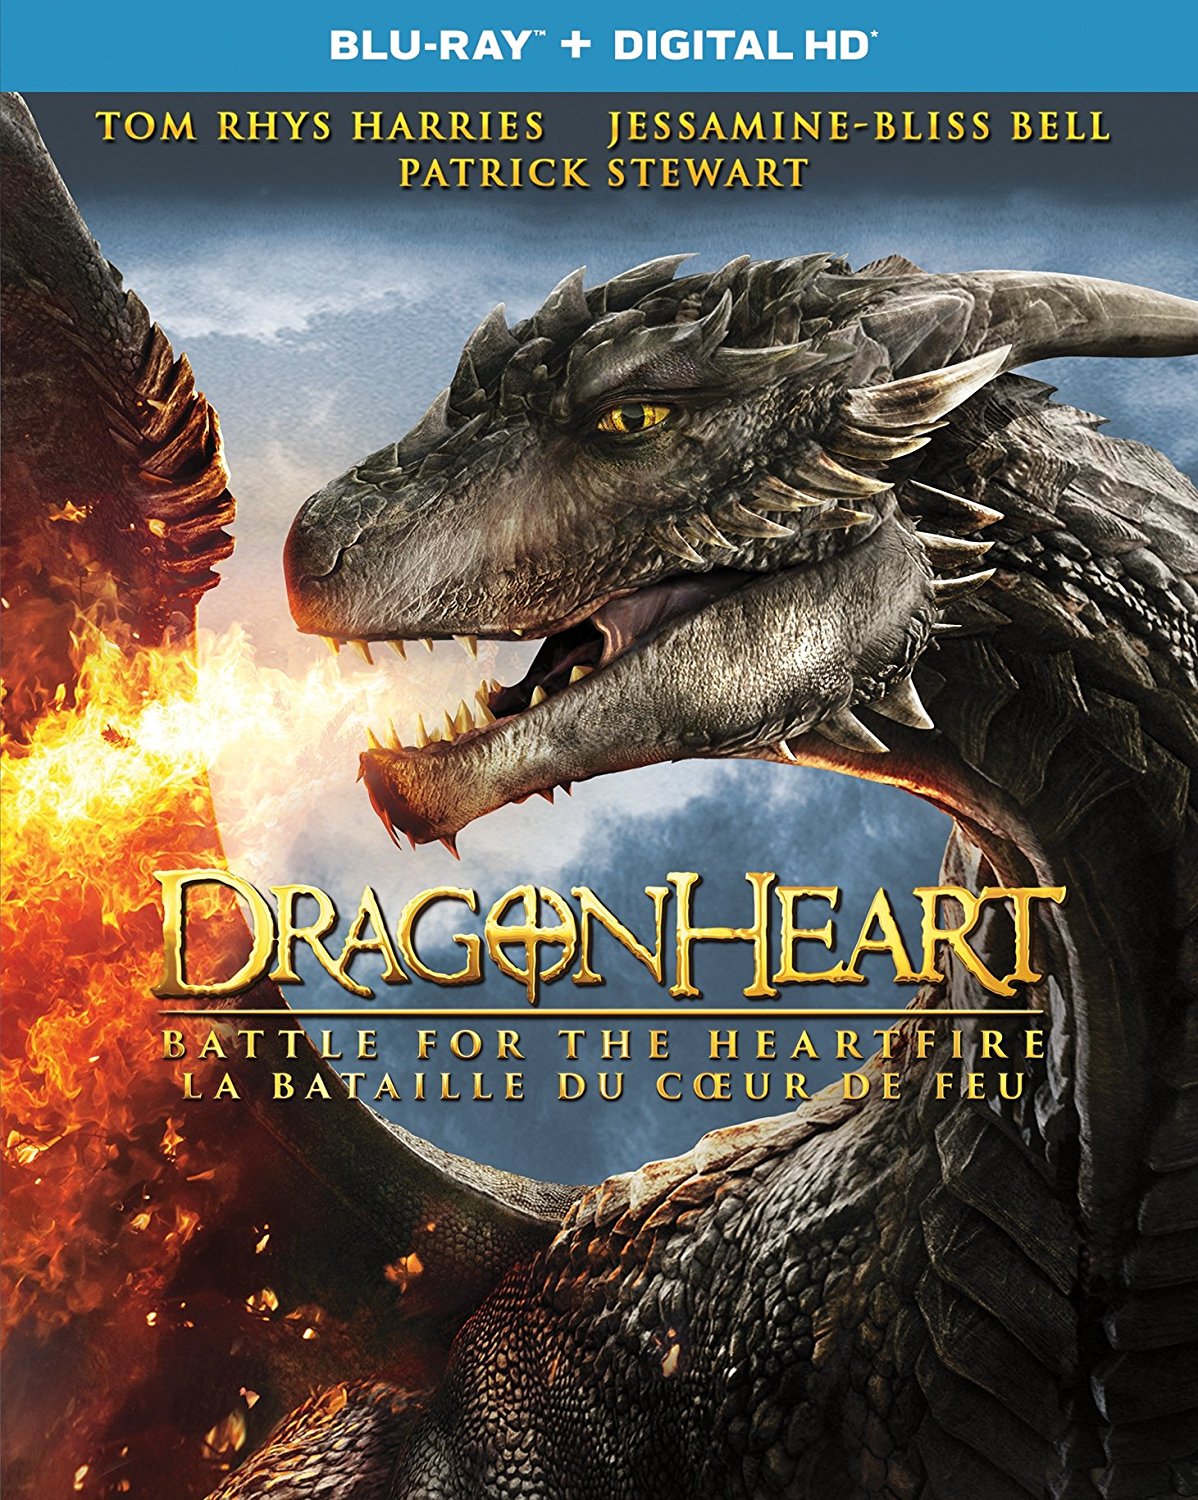 Dragonheart: Battle for the Heartfire Blu-ray